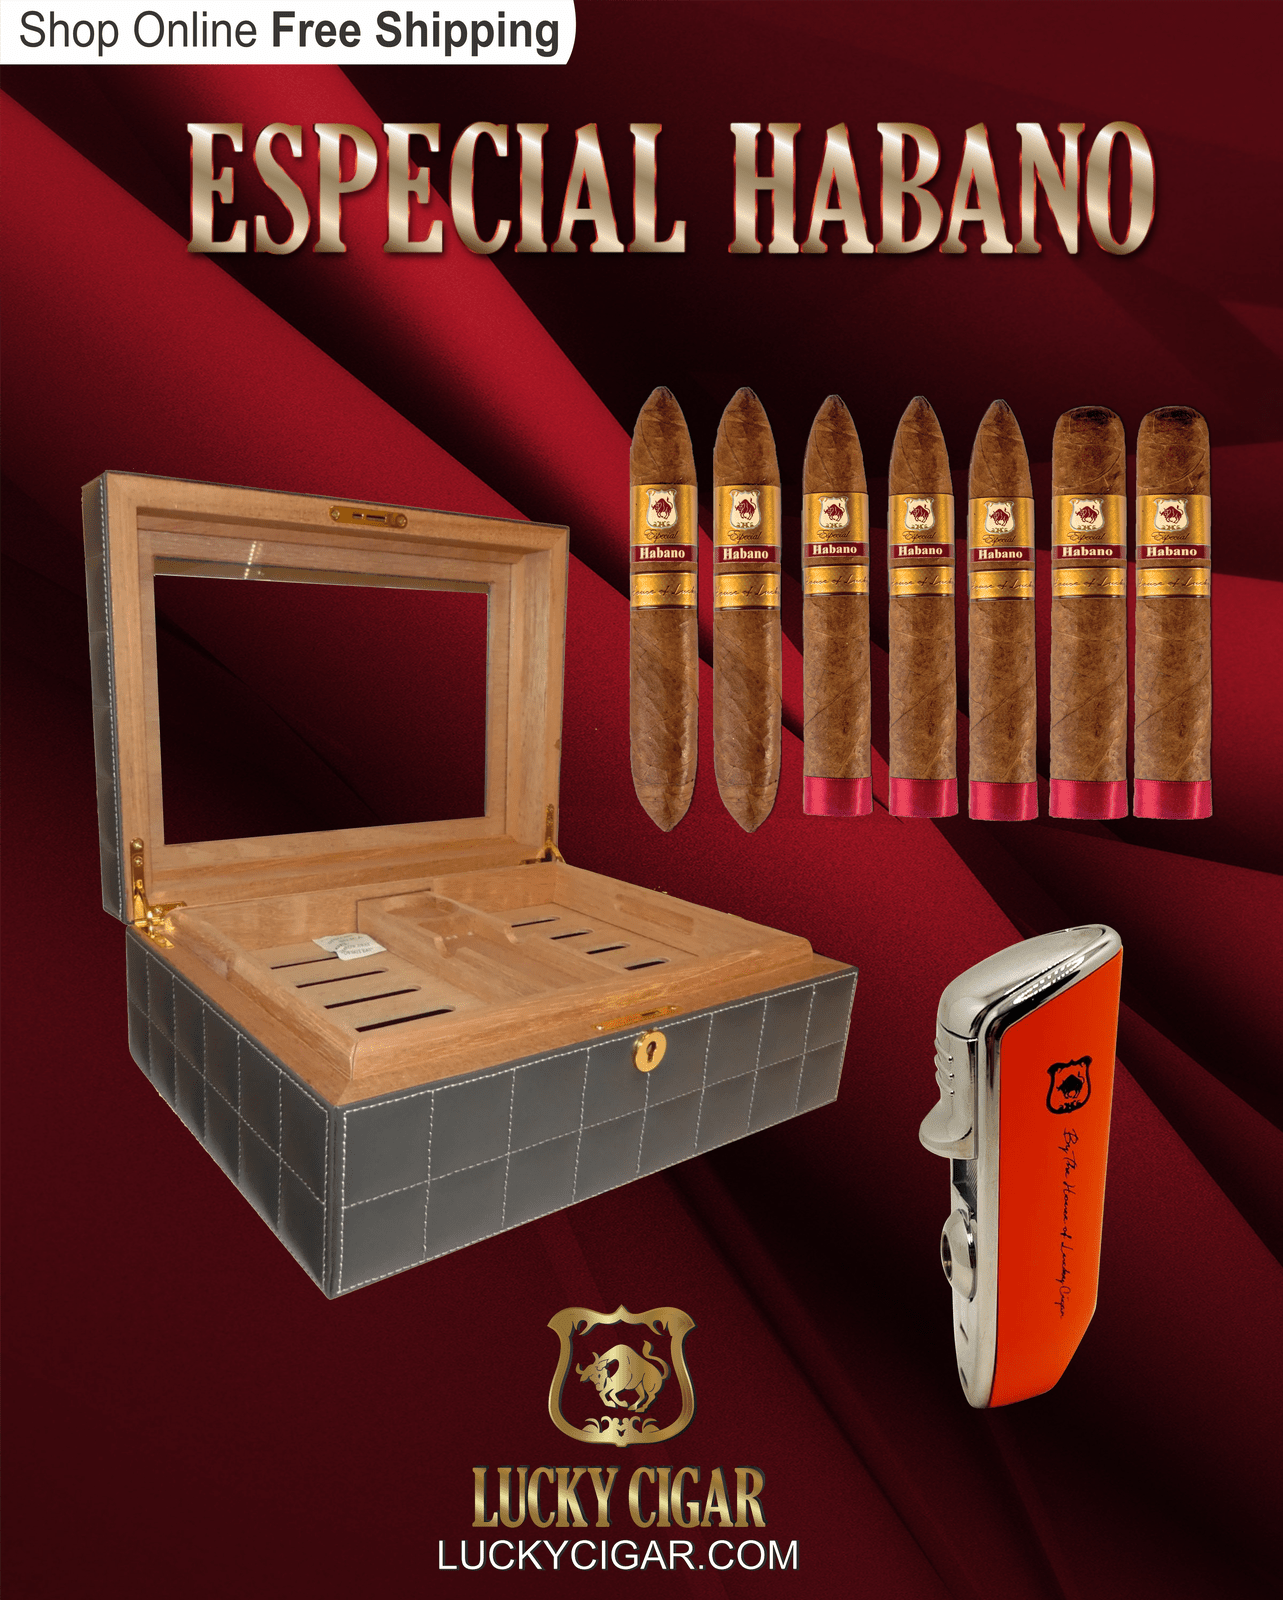 Habano Cigars: Especial Habano by Lucky Cigar: Set of 7 Cigars 3 Torpedo, 2 Perfecto, 2 Toro with Humidor and Torch